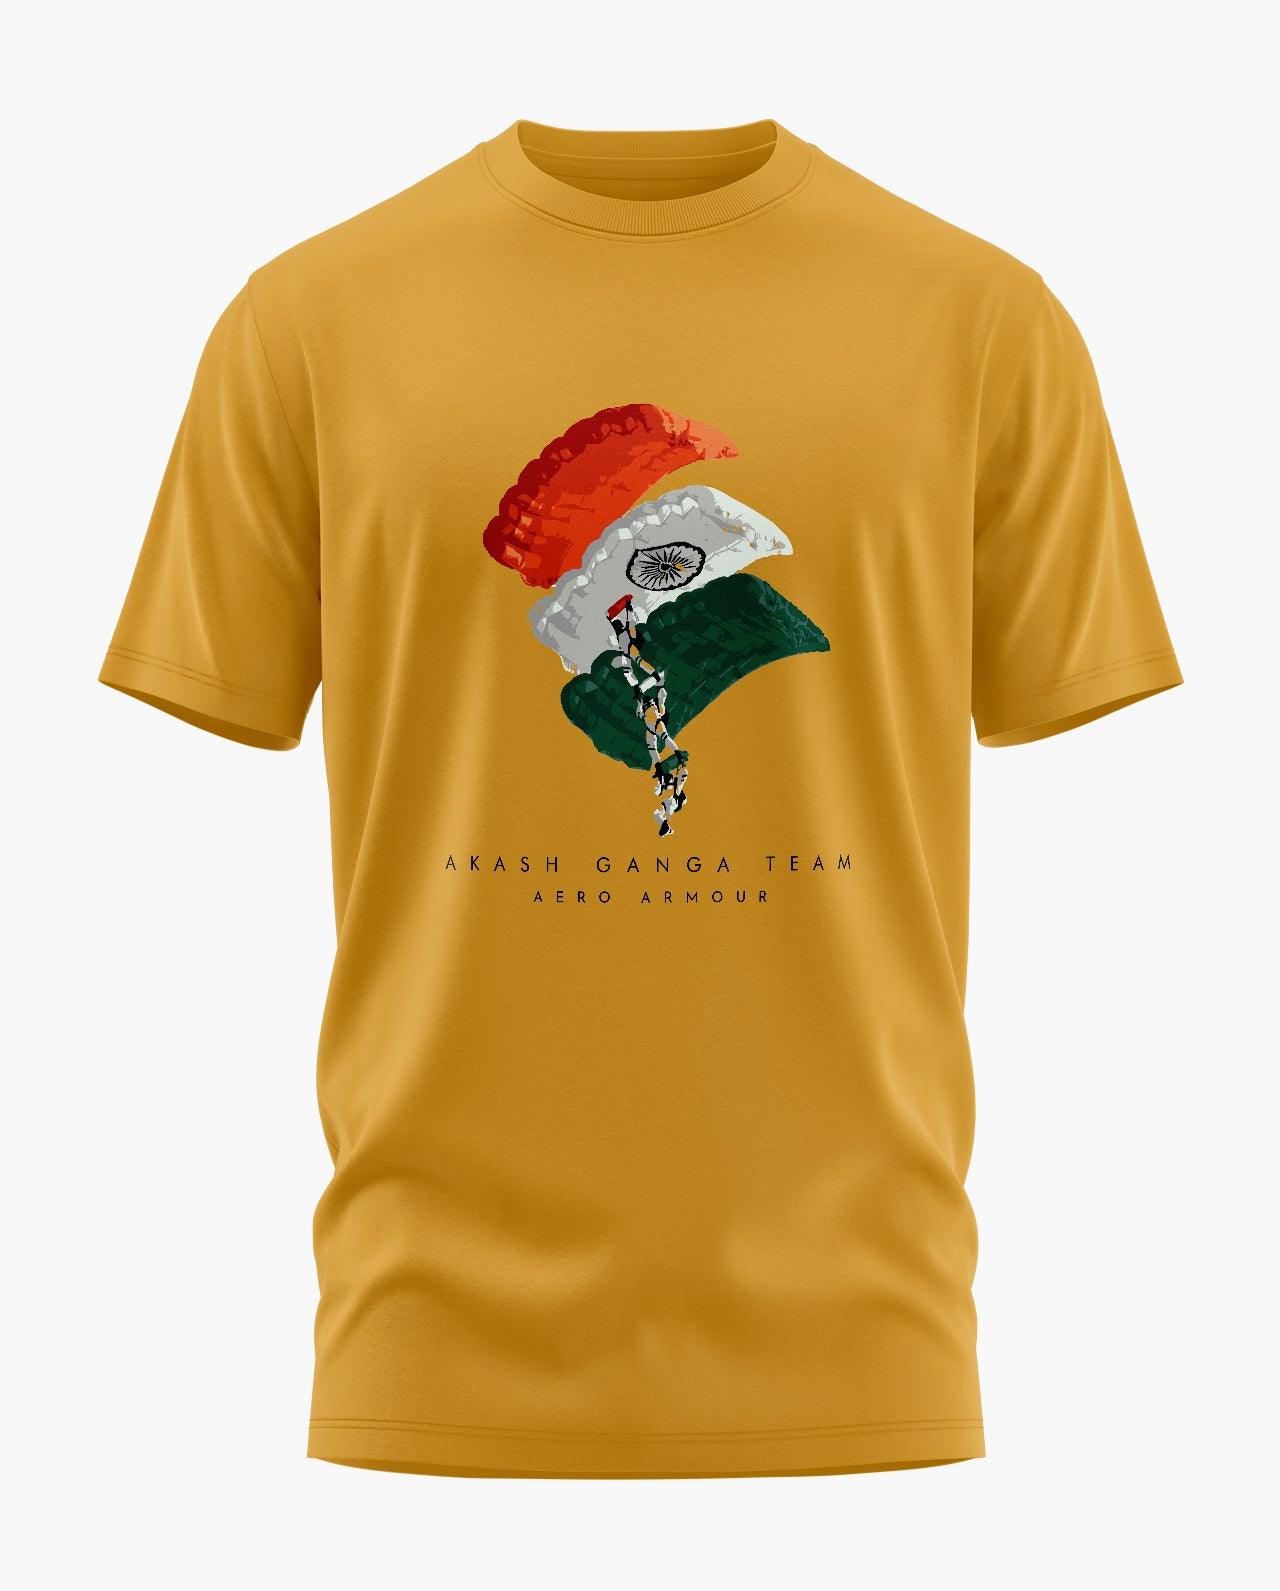 Akash Ganga T-Shirt exclusive at Aero Armour